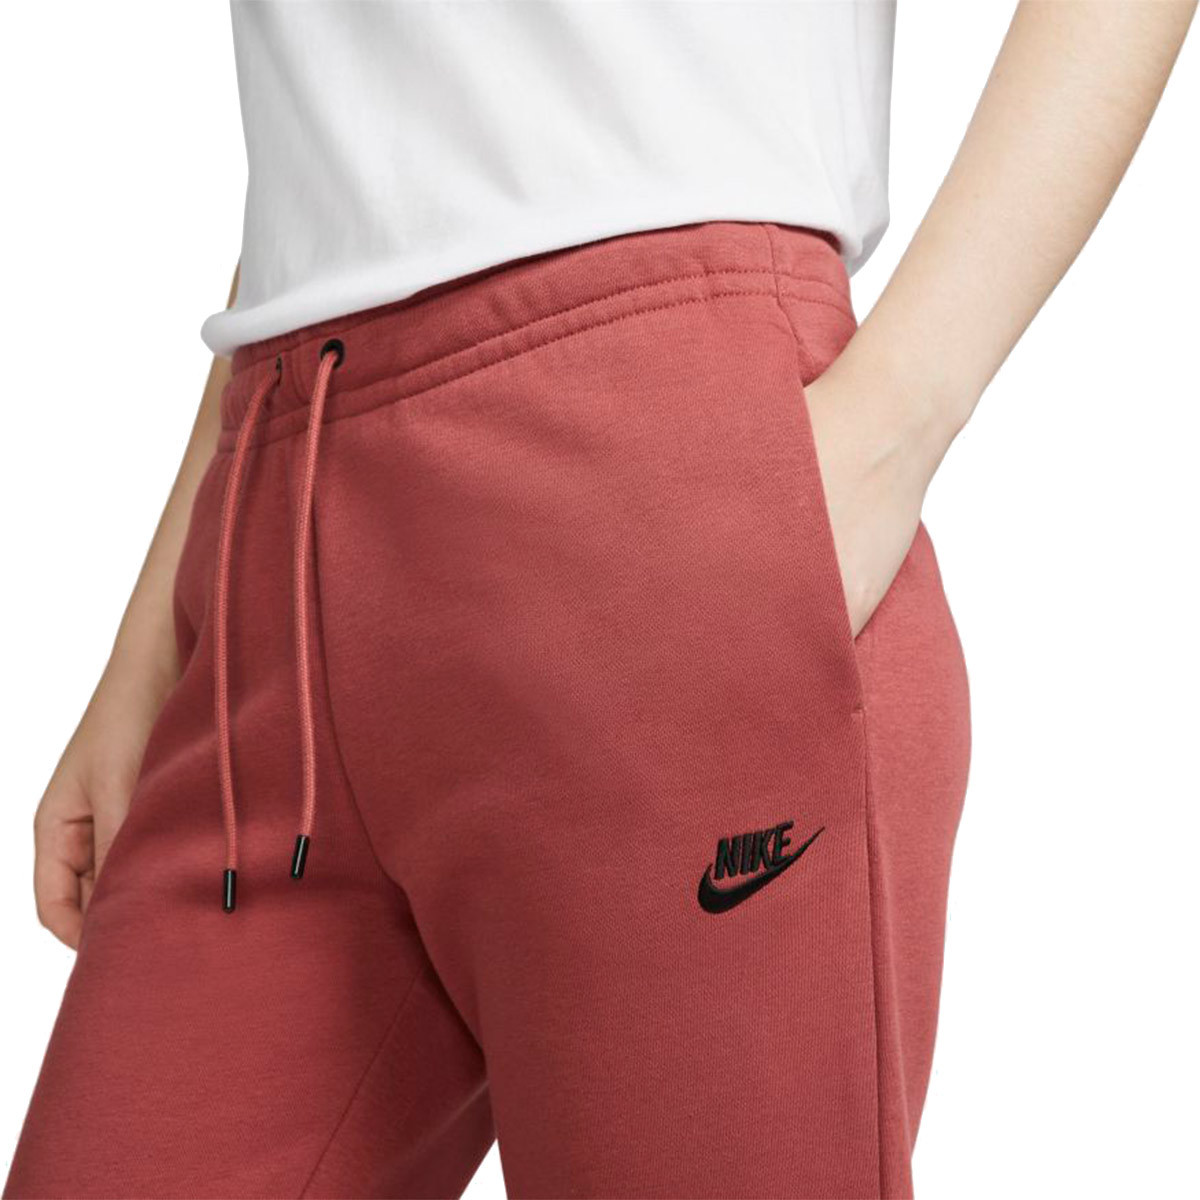 largo Nike Essentials Mujer Canyon Rust-Black - Fútbol